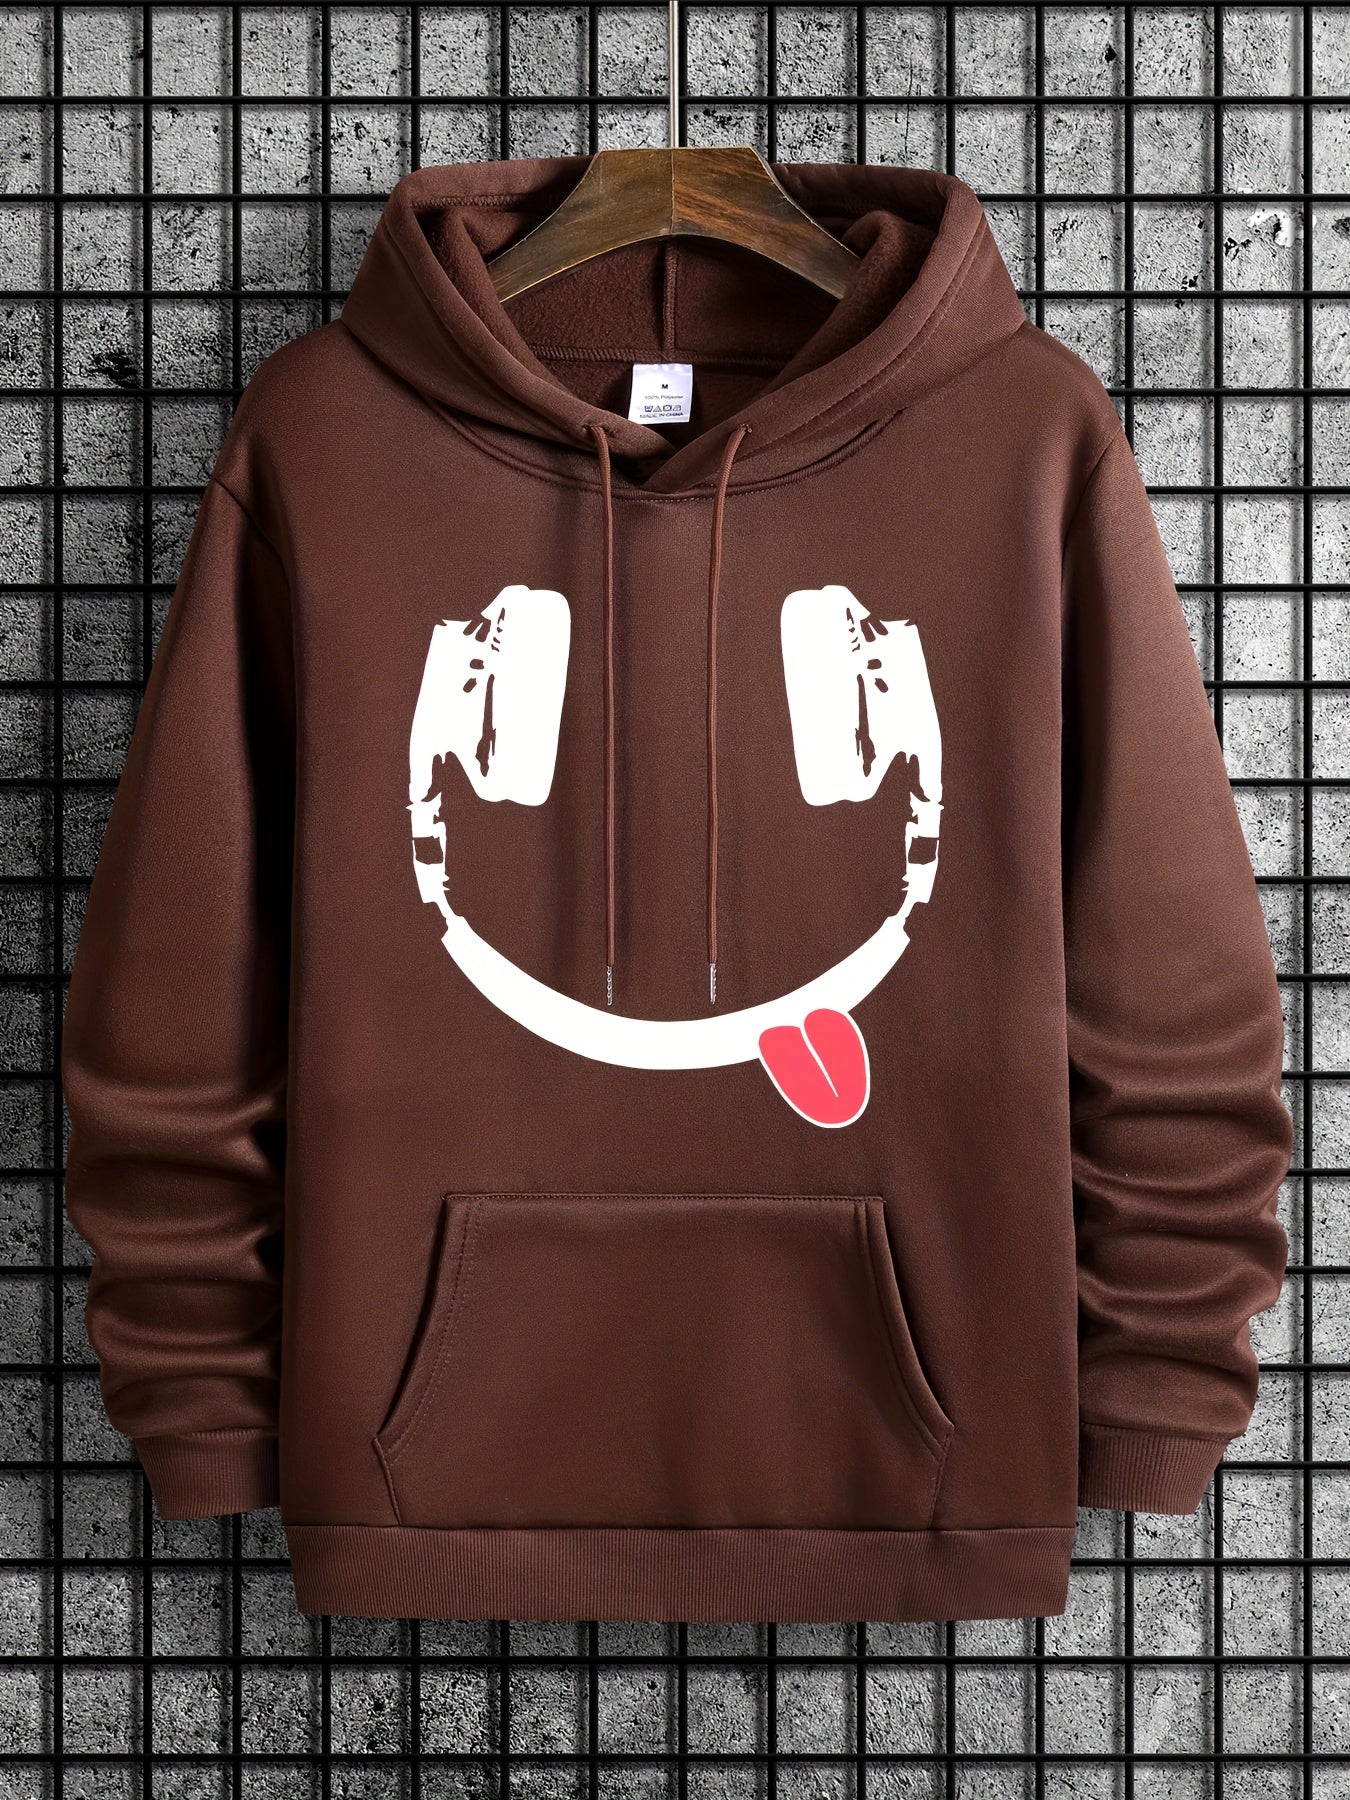 Headphone Smile Print Hoodie, Hoodies For Men, Men's Casual Graphic Design Pullover Hooded Sweatshirt With Kangaroo Pocket Streetwear For Winter Fall, As Gifts